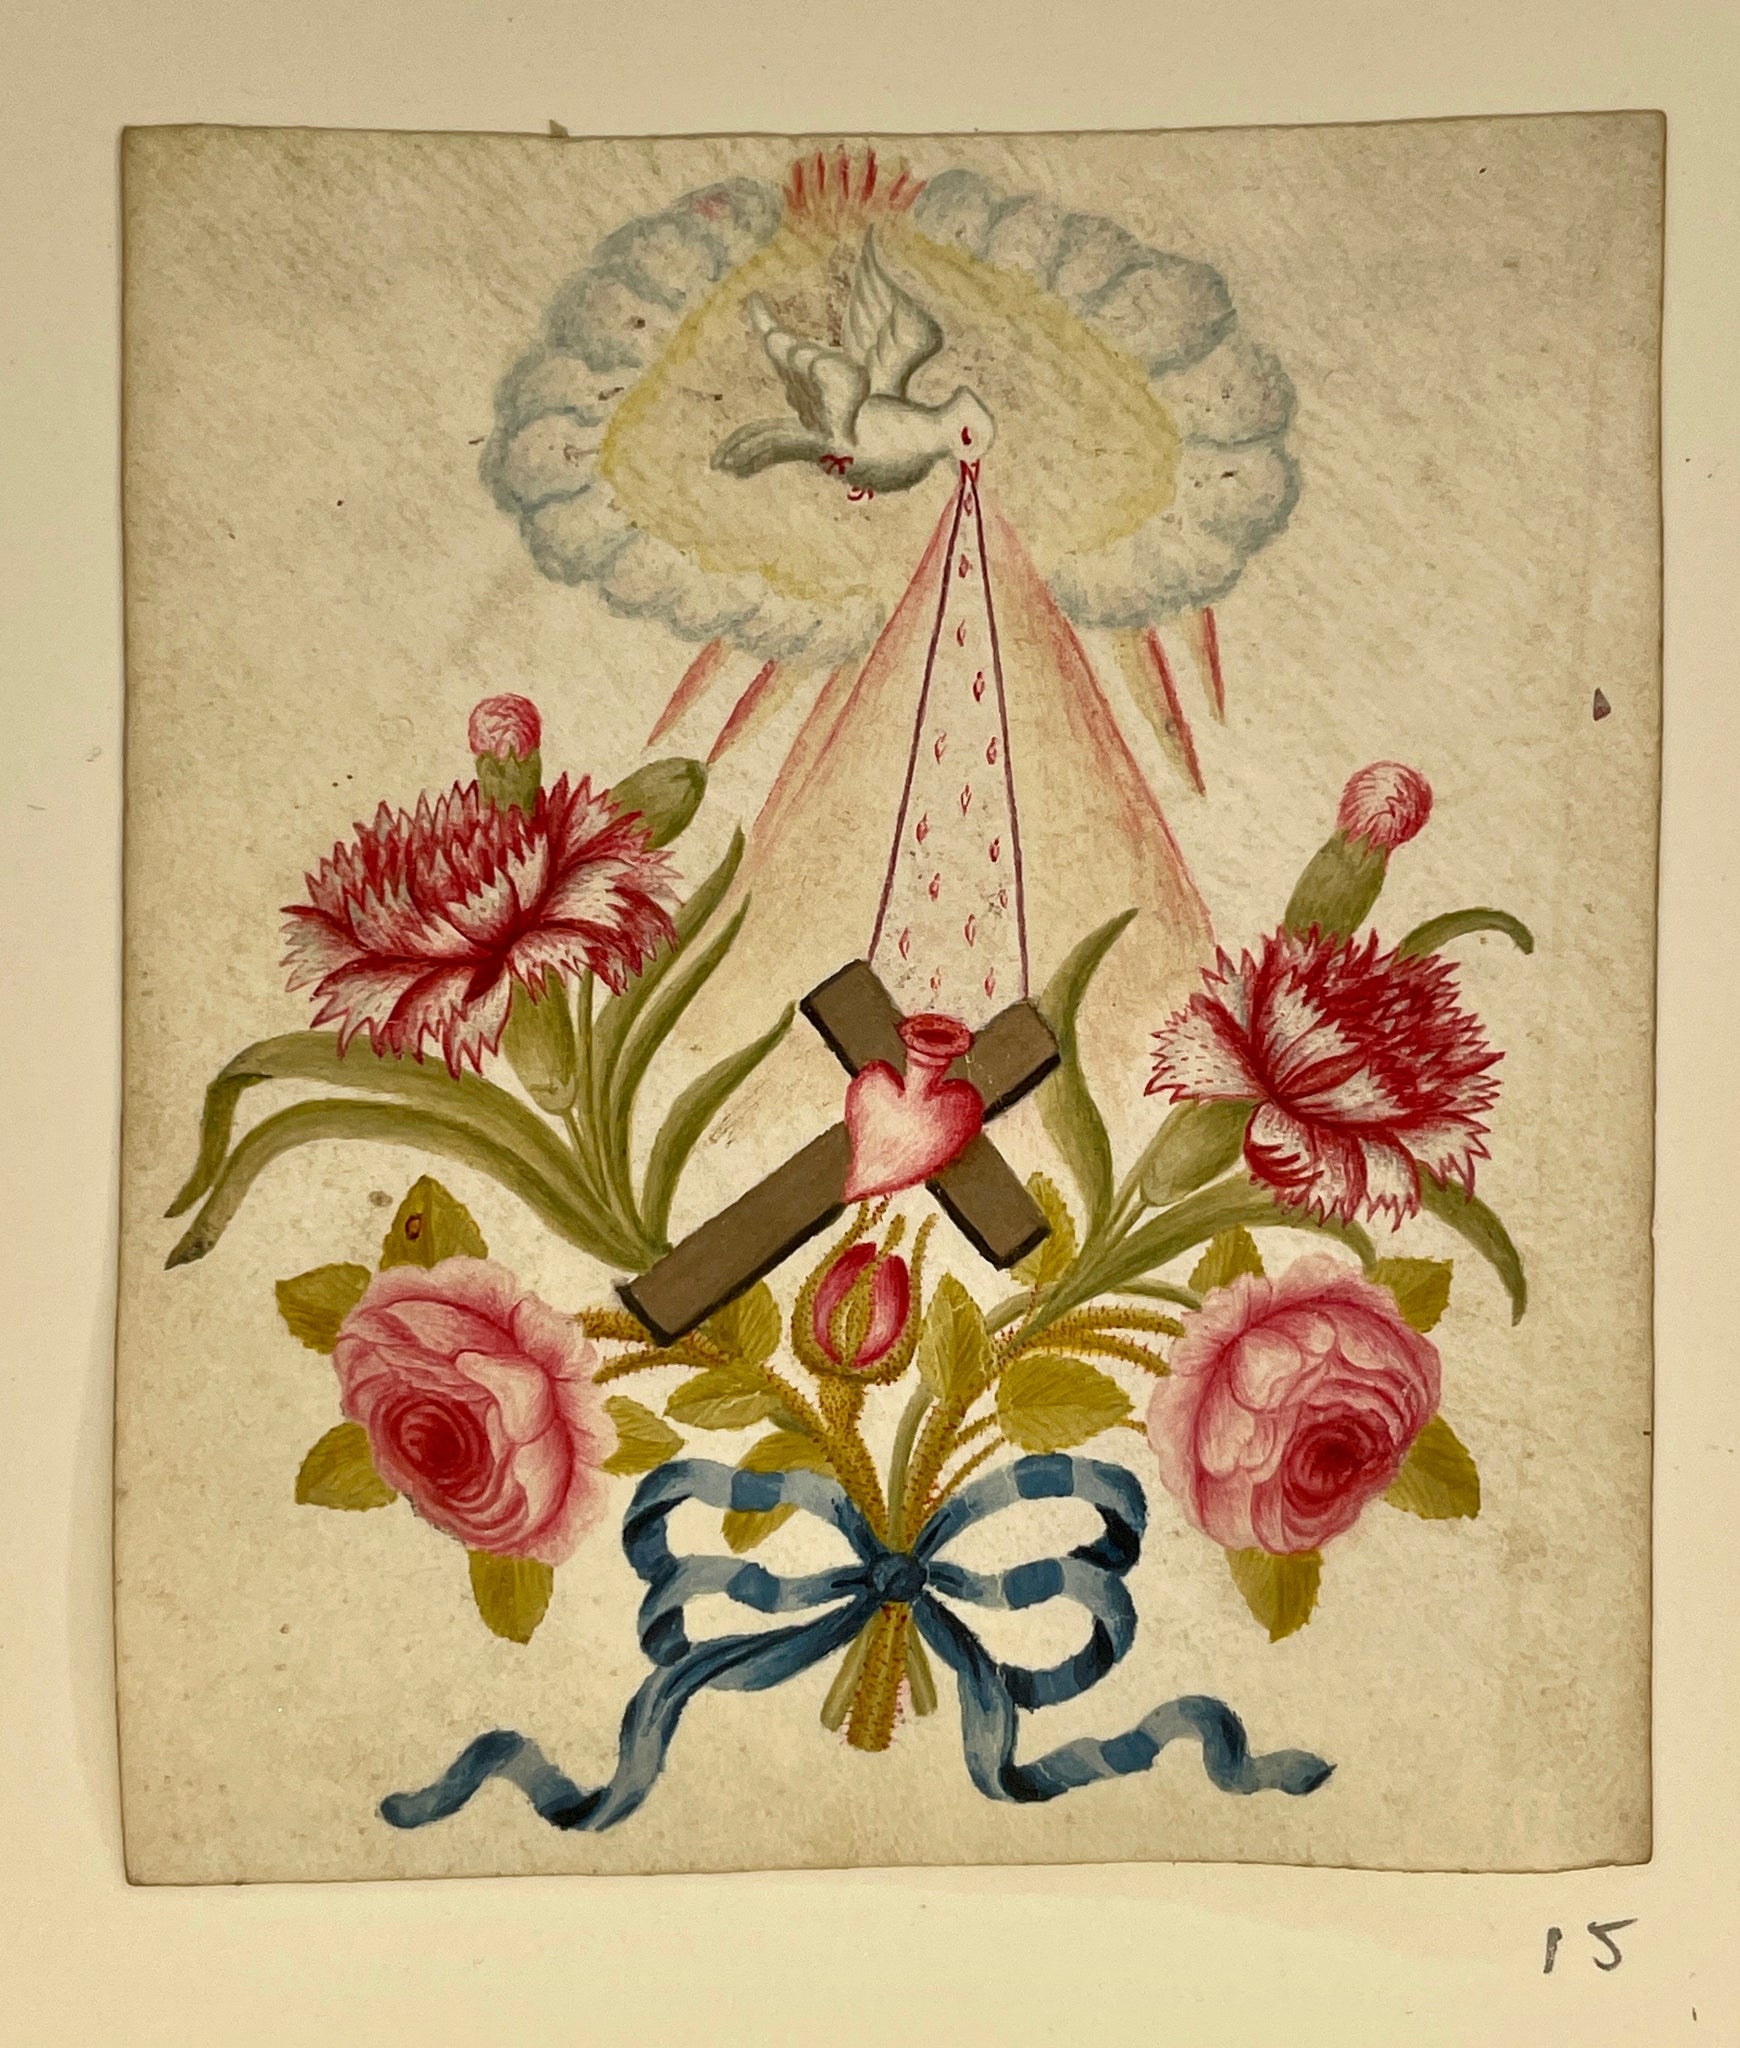 #15 - Handpainted Devotional Prayer Card, ca. 1820